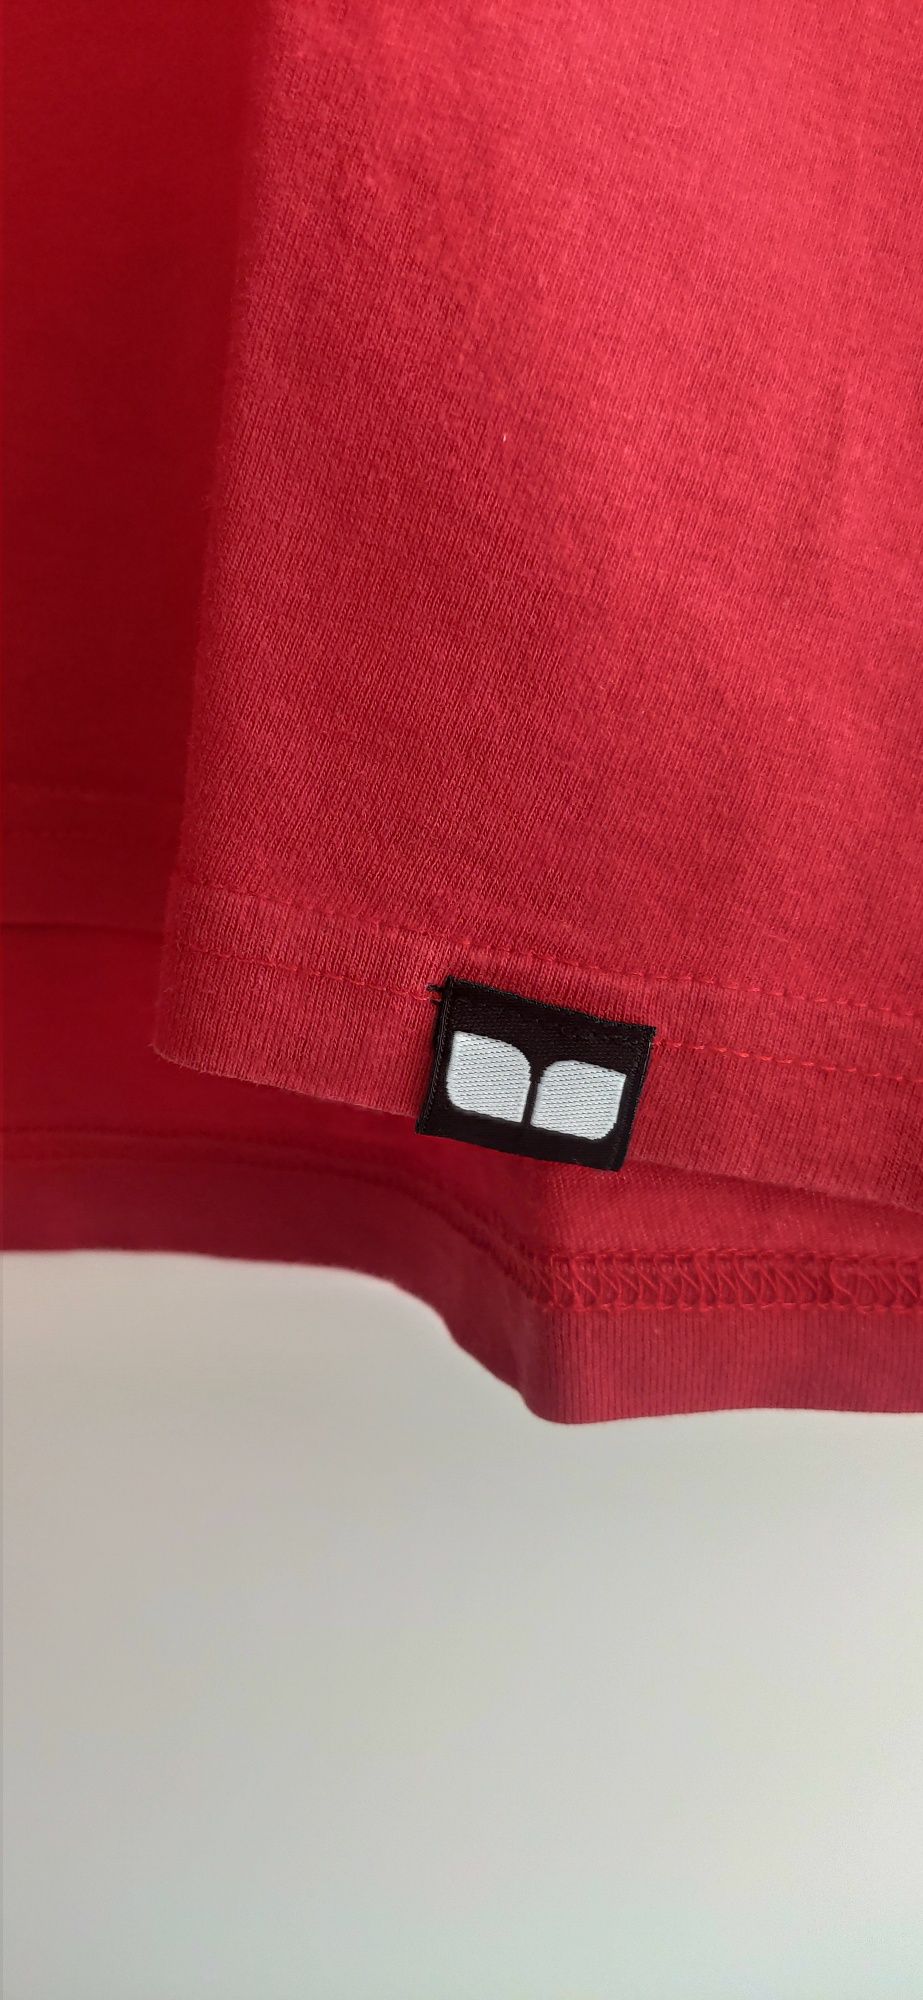 Camisola vermelha da Doone Essentials